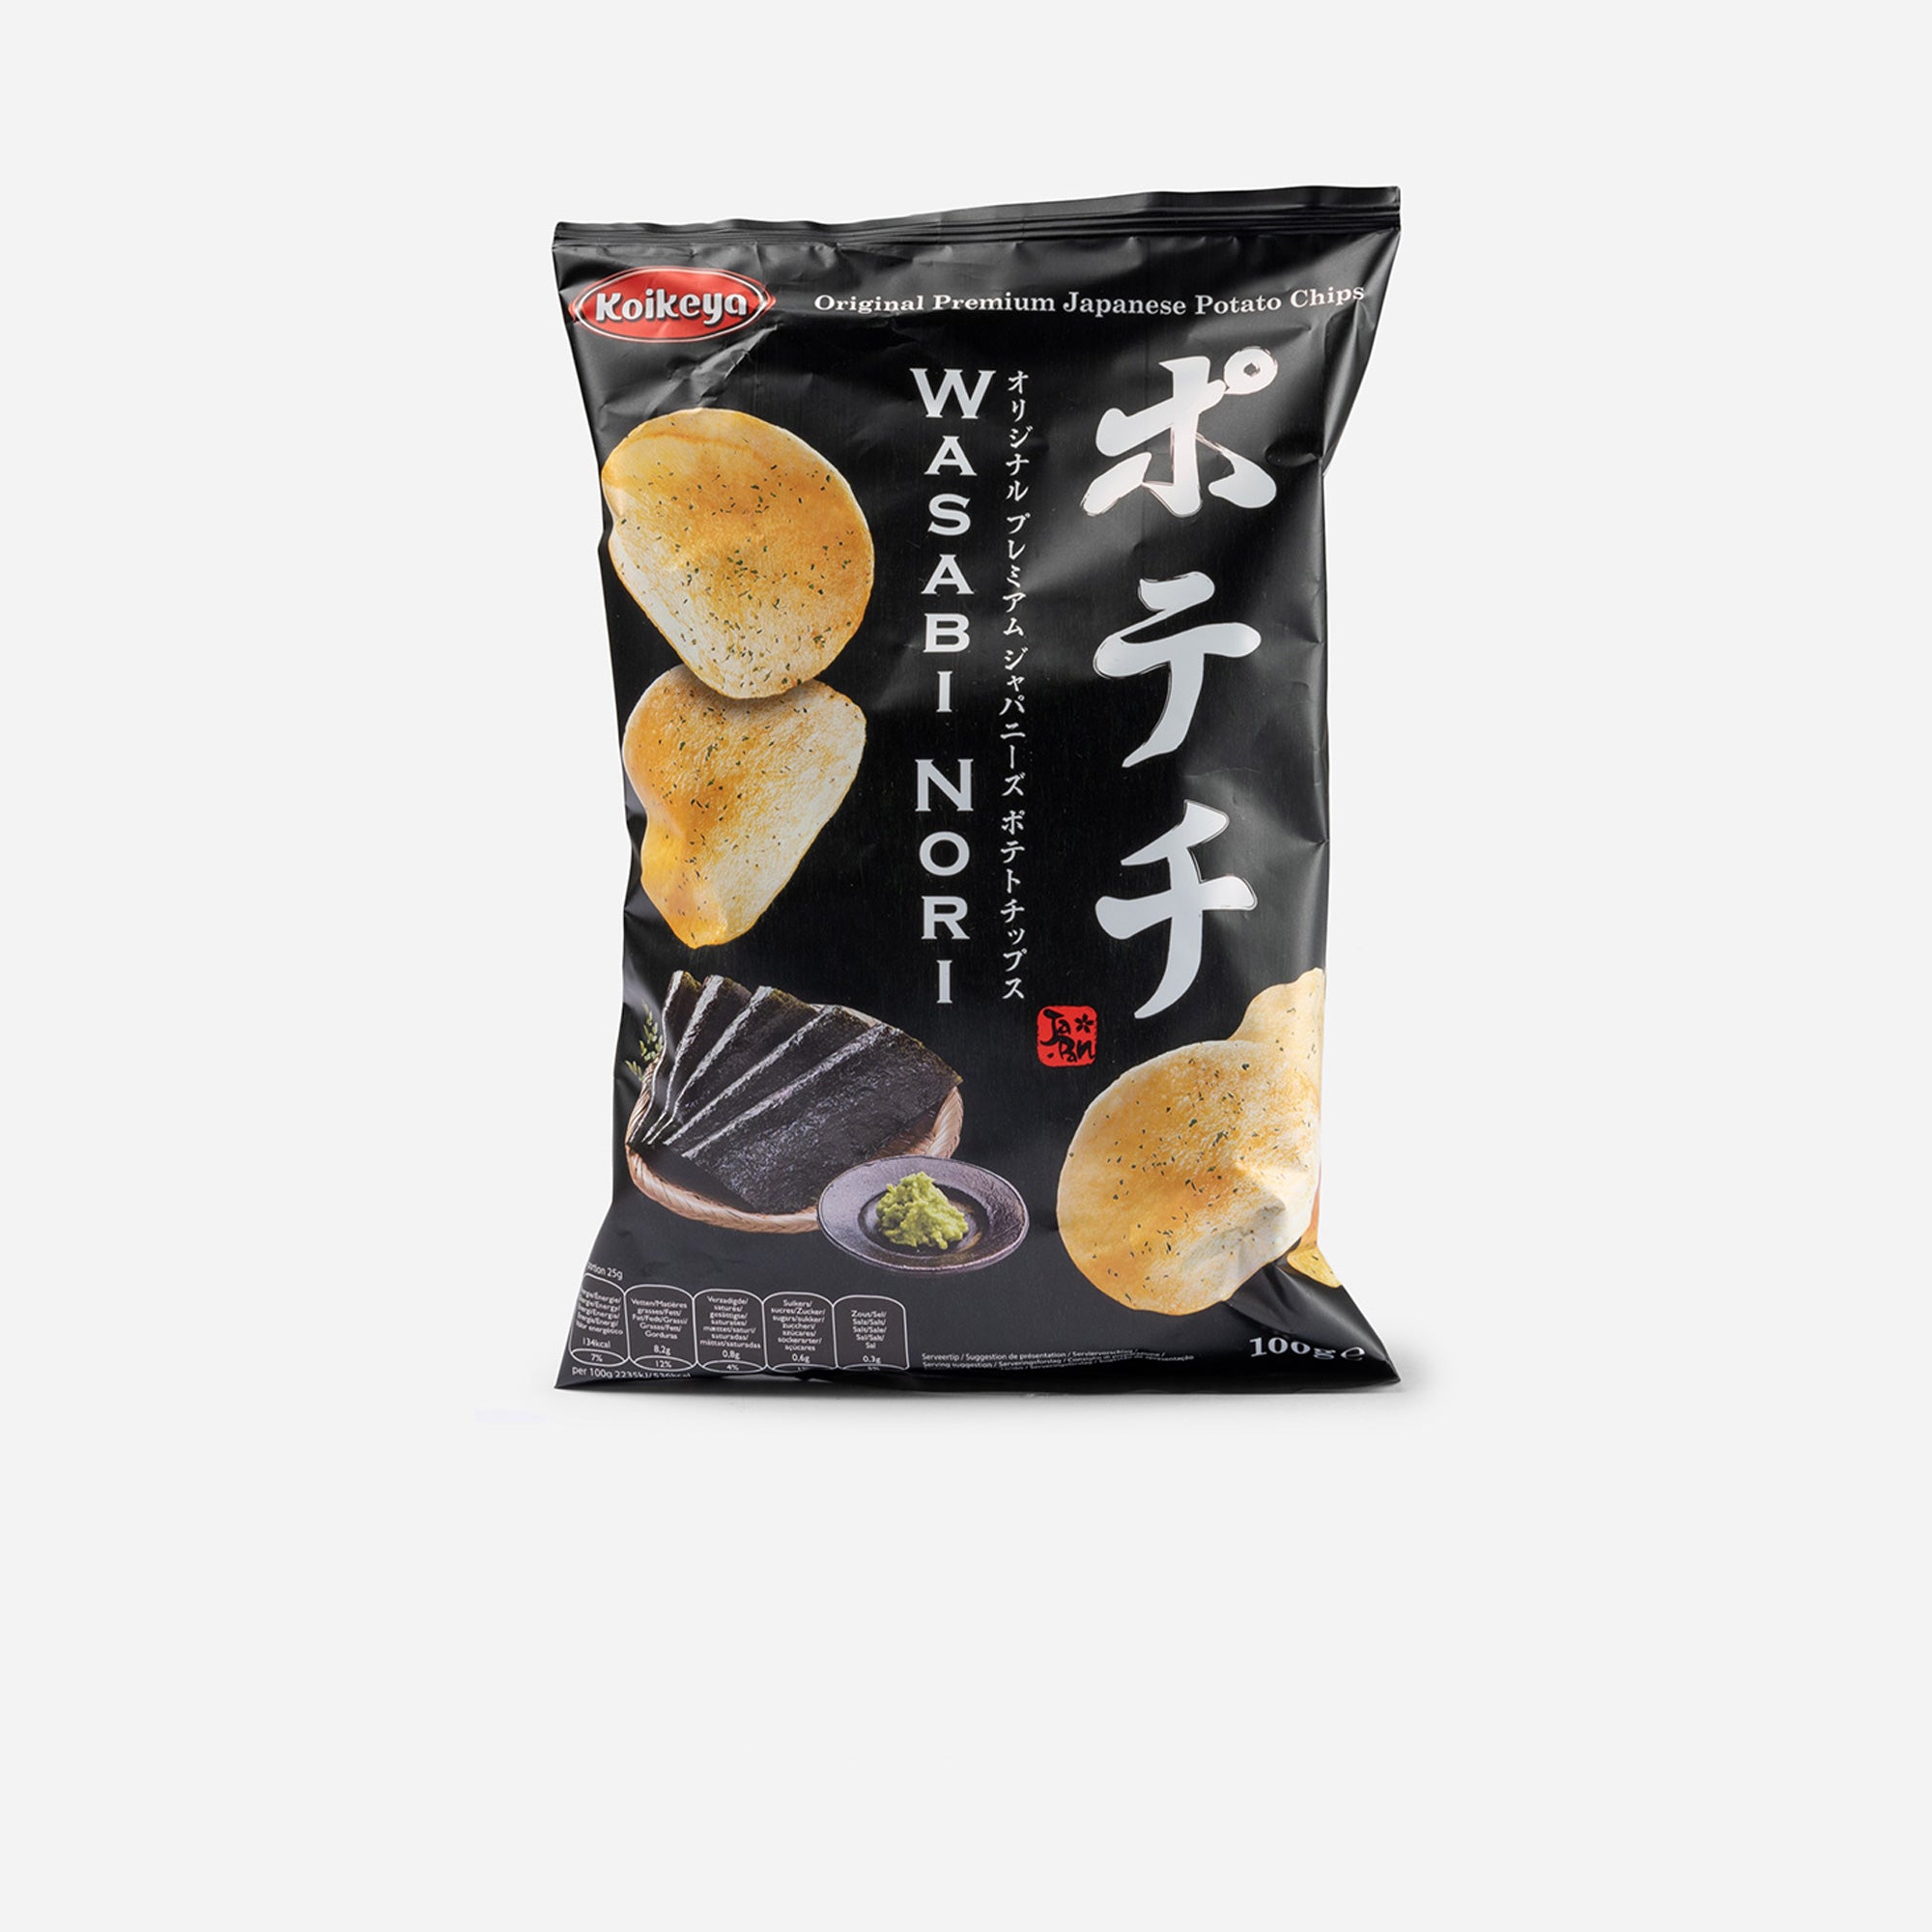 Wasabi Nori chips